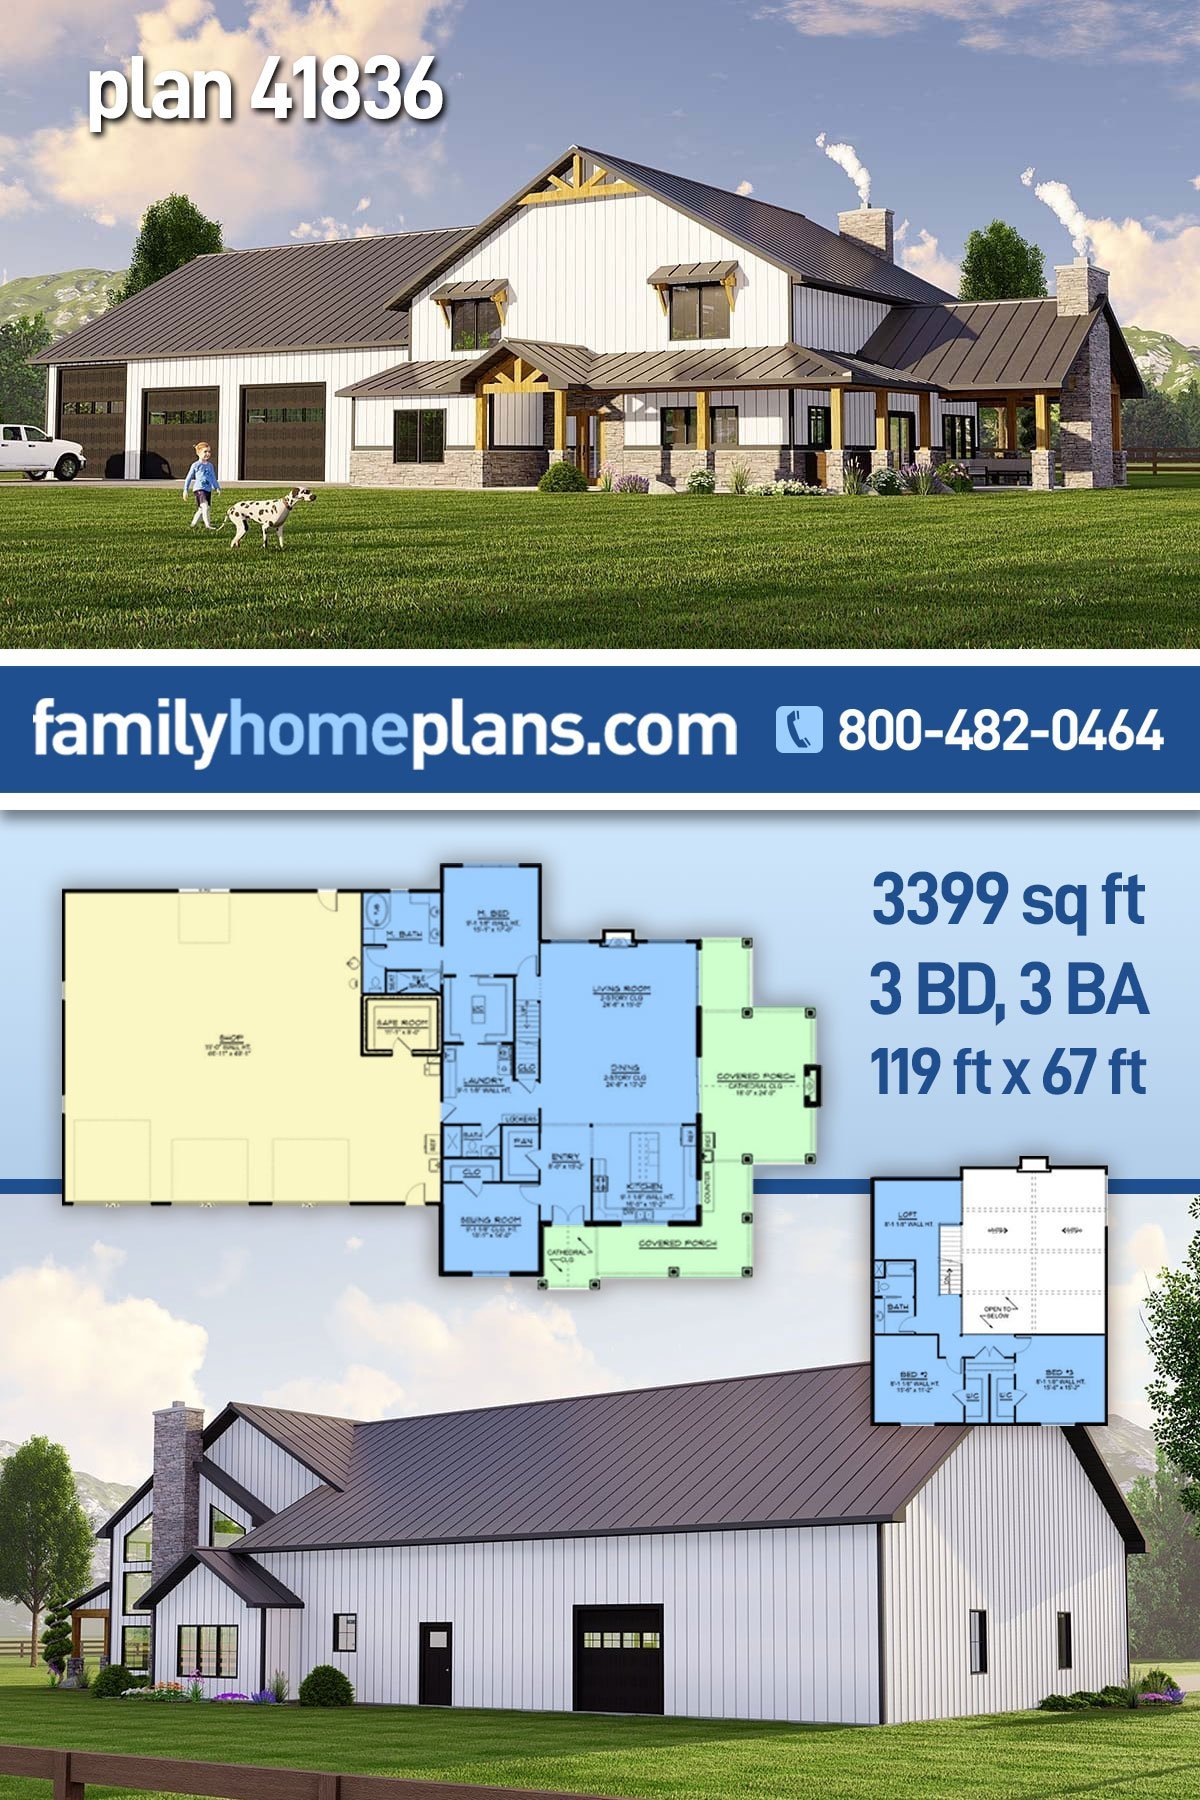 House Plan 41836